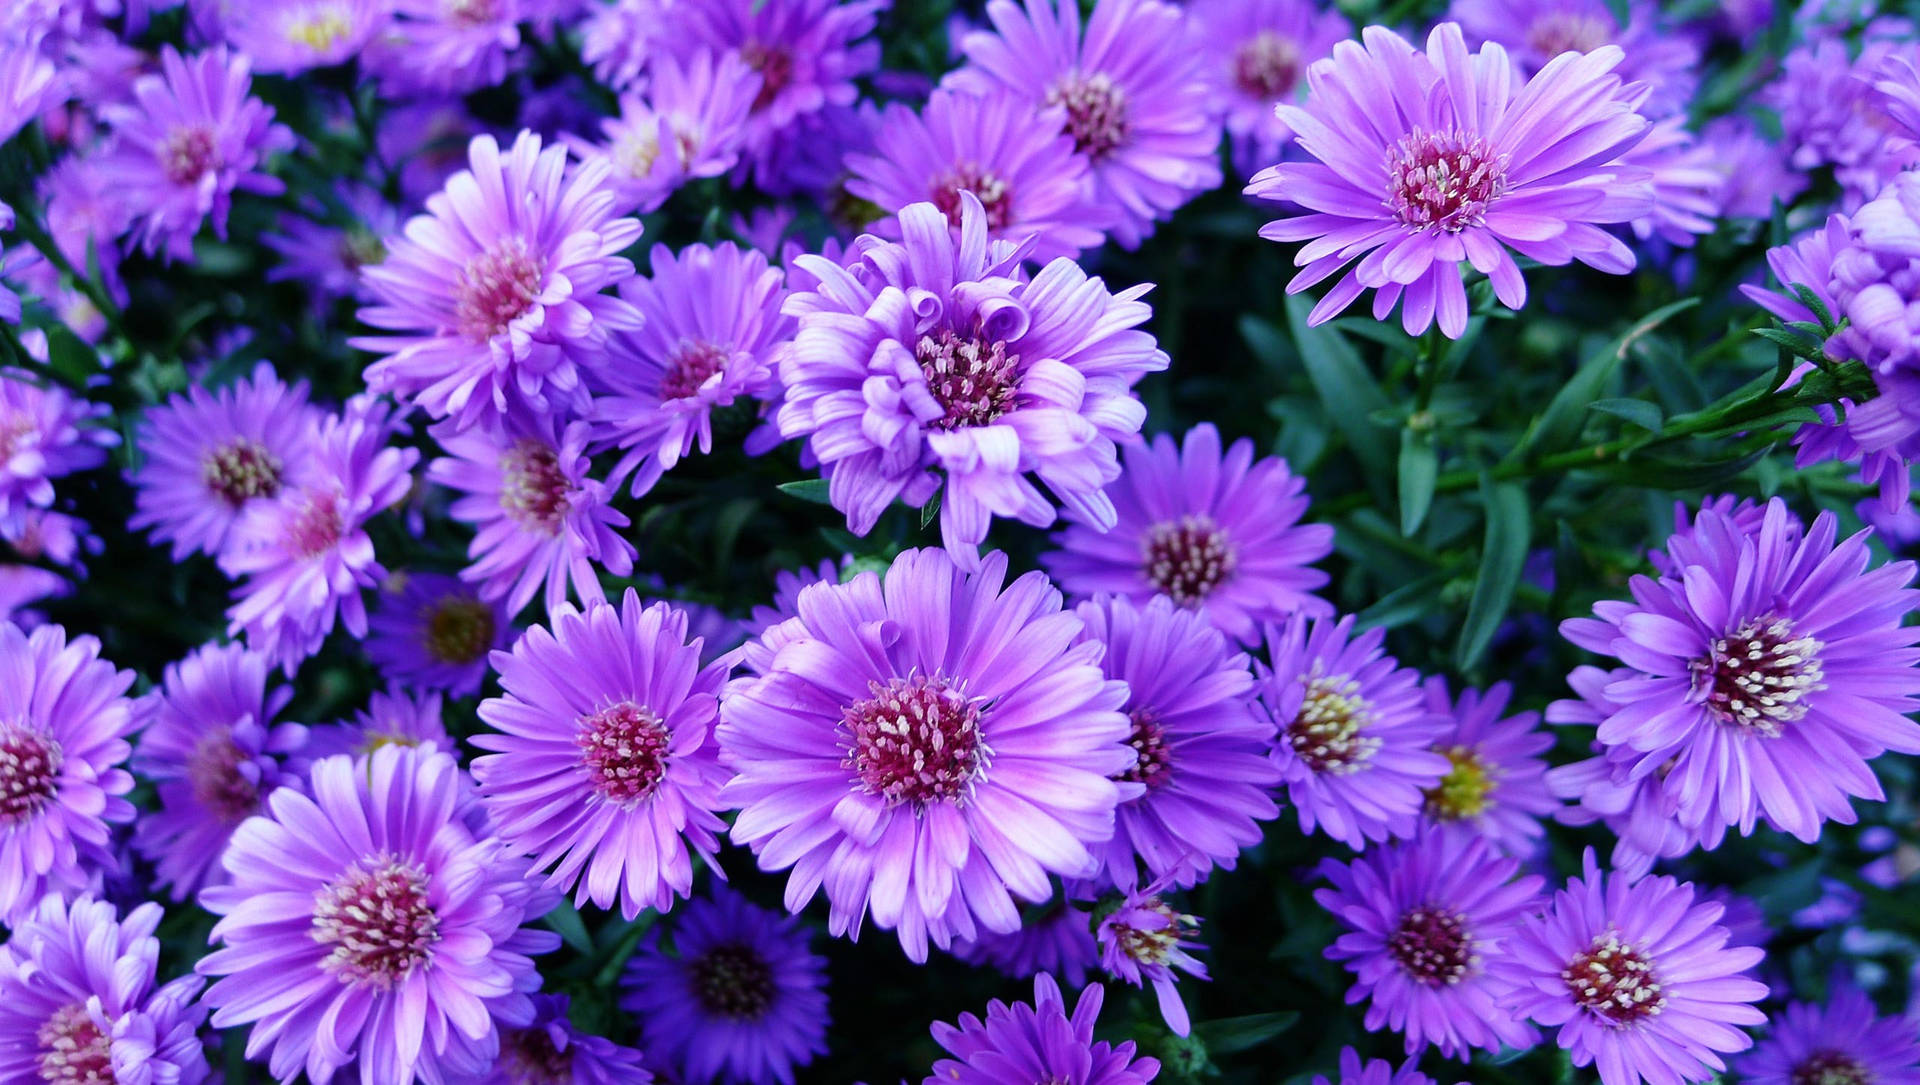 "Beautiful Aesthetic Purple Flower Stretching Its Petals” Wallpaper